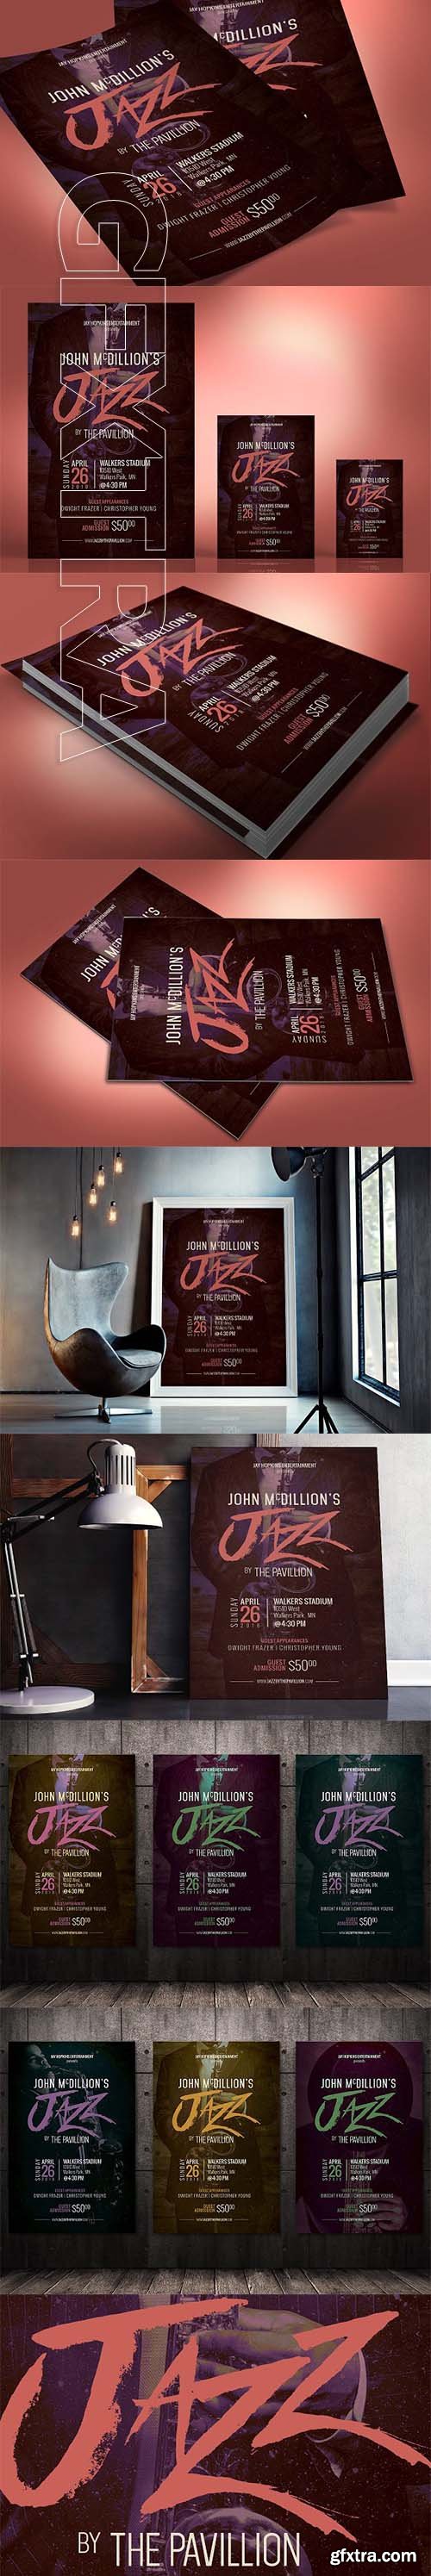 CreativeMarket - Jazz Concert Flyer Poster Template 2266885